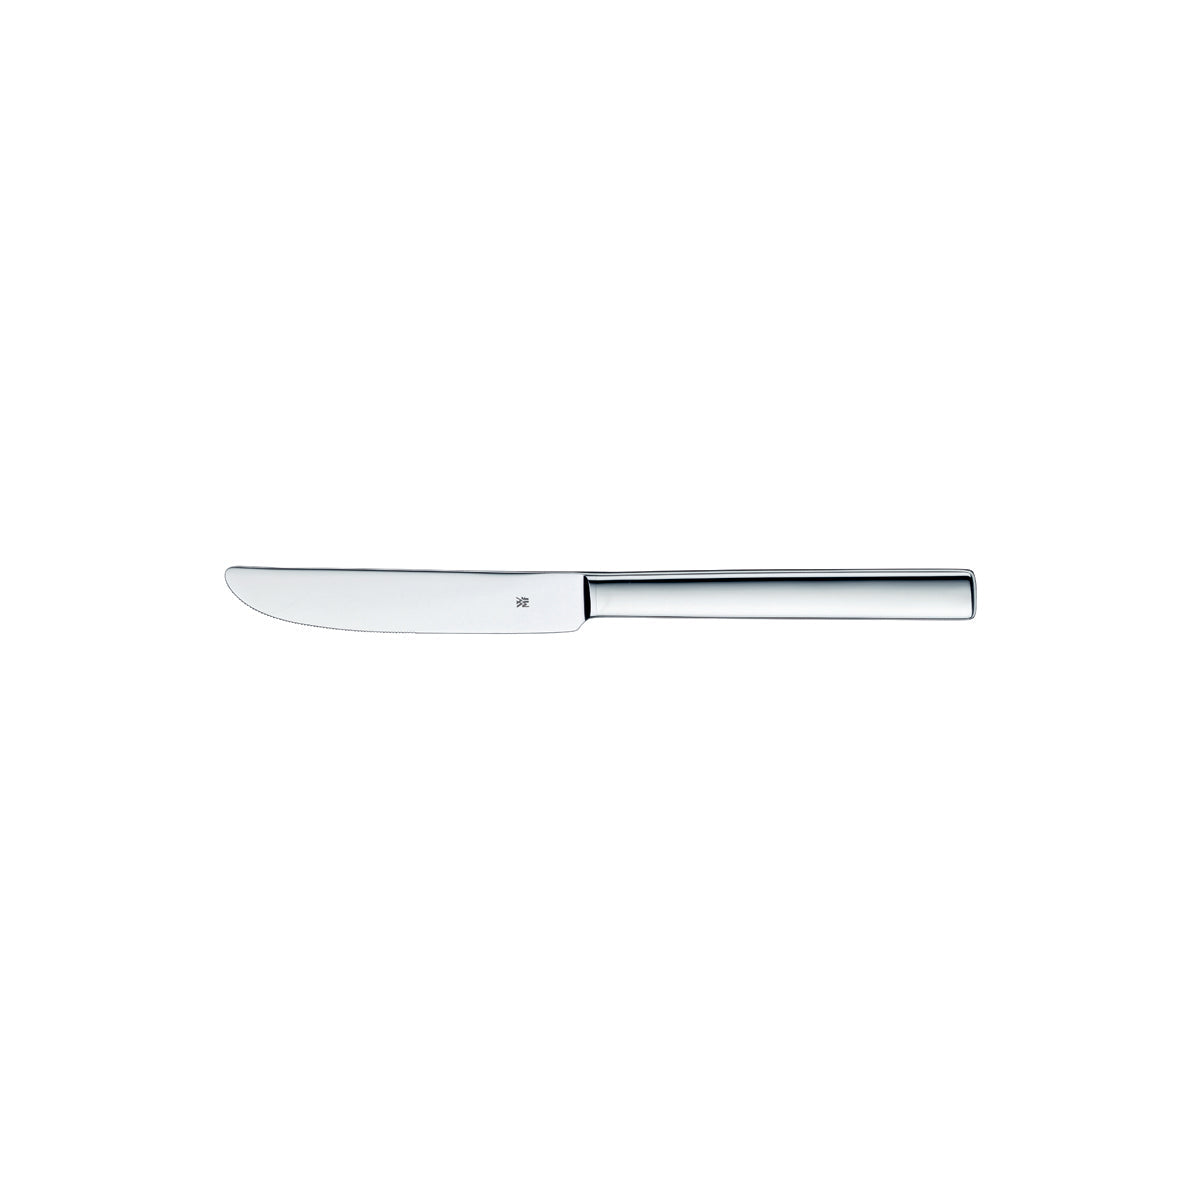 10.5303.6069 WMF Unic Table Knife Silverplated Tomkin Australia Hospitality Supplies